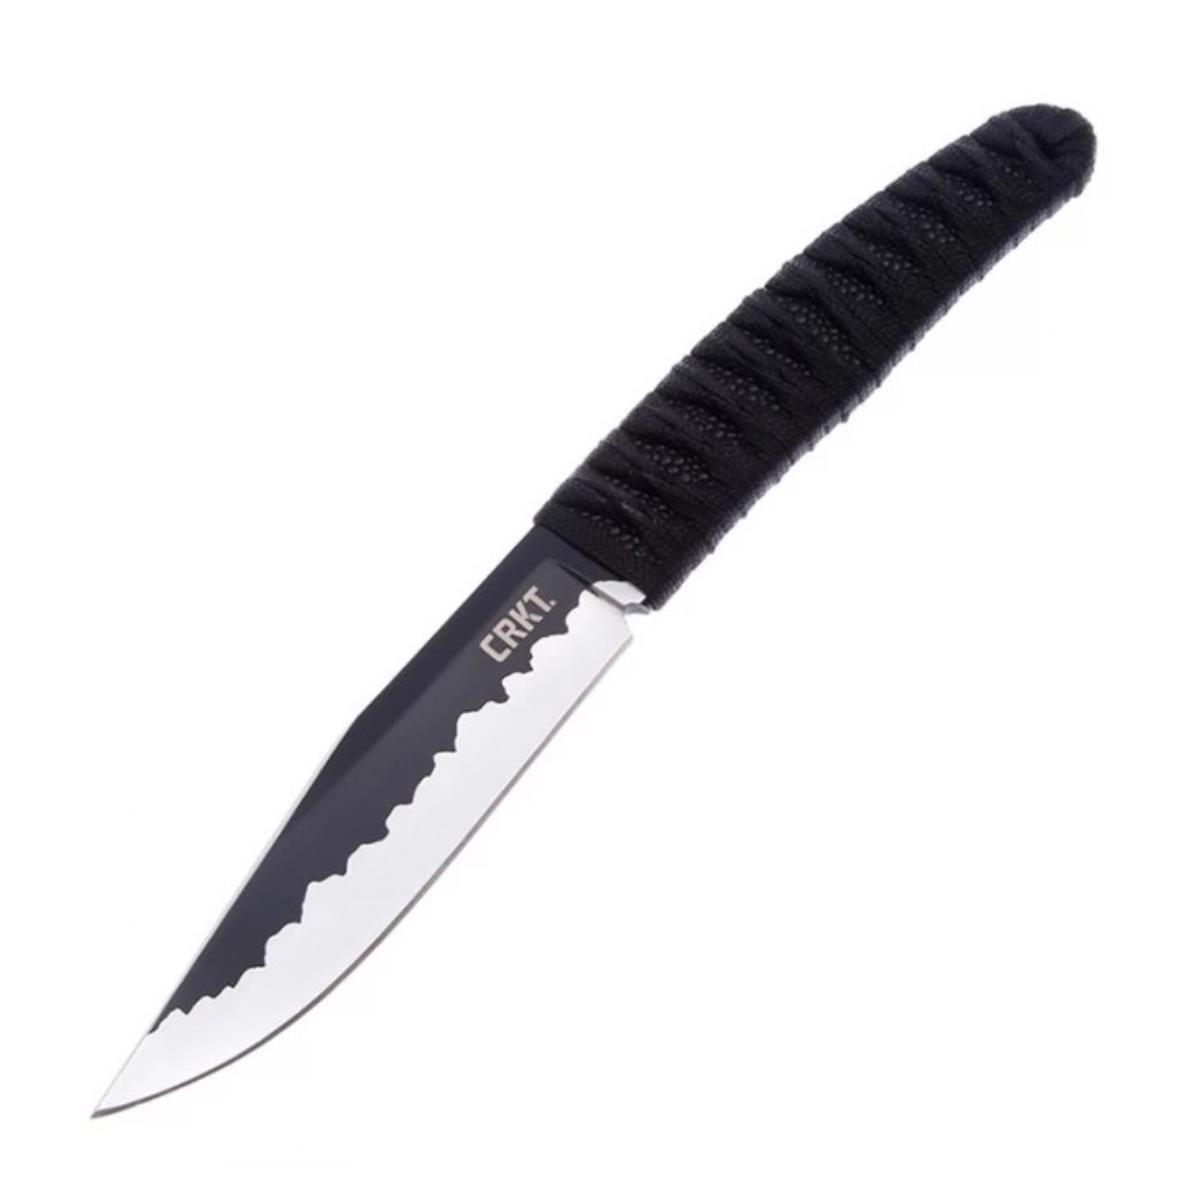 Нож Nishi с фикс. клинком, рук-ть паракорд, клинок 8Cr13MoV, пластик. ножны CRKT_2290